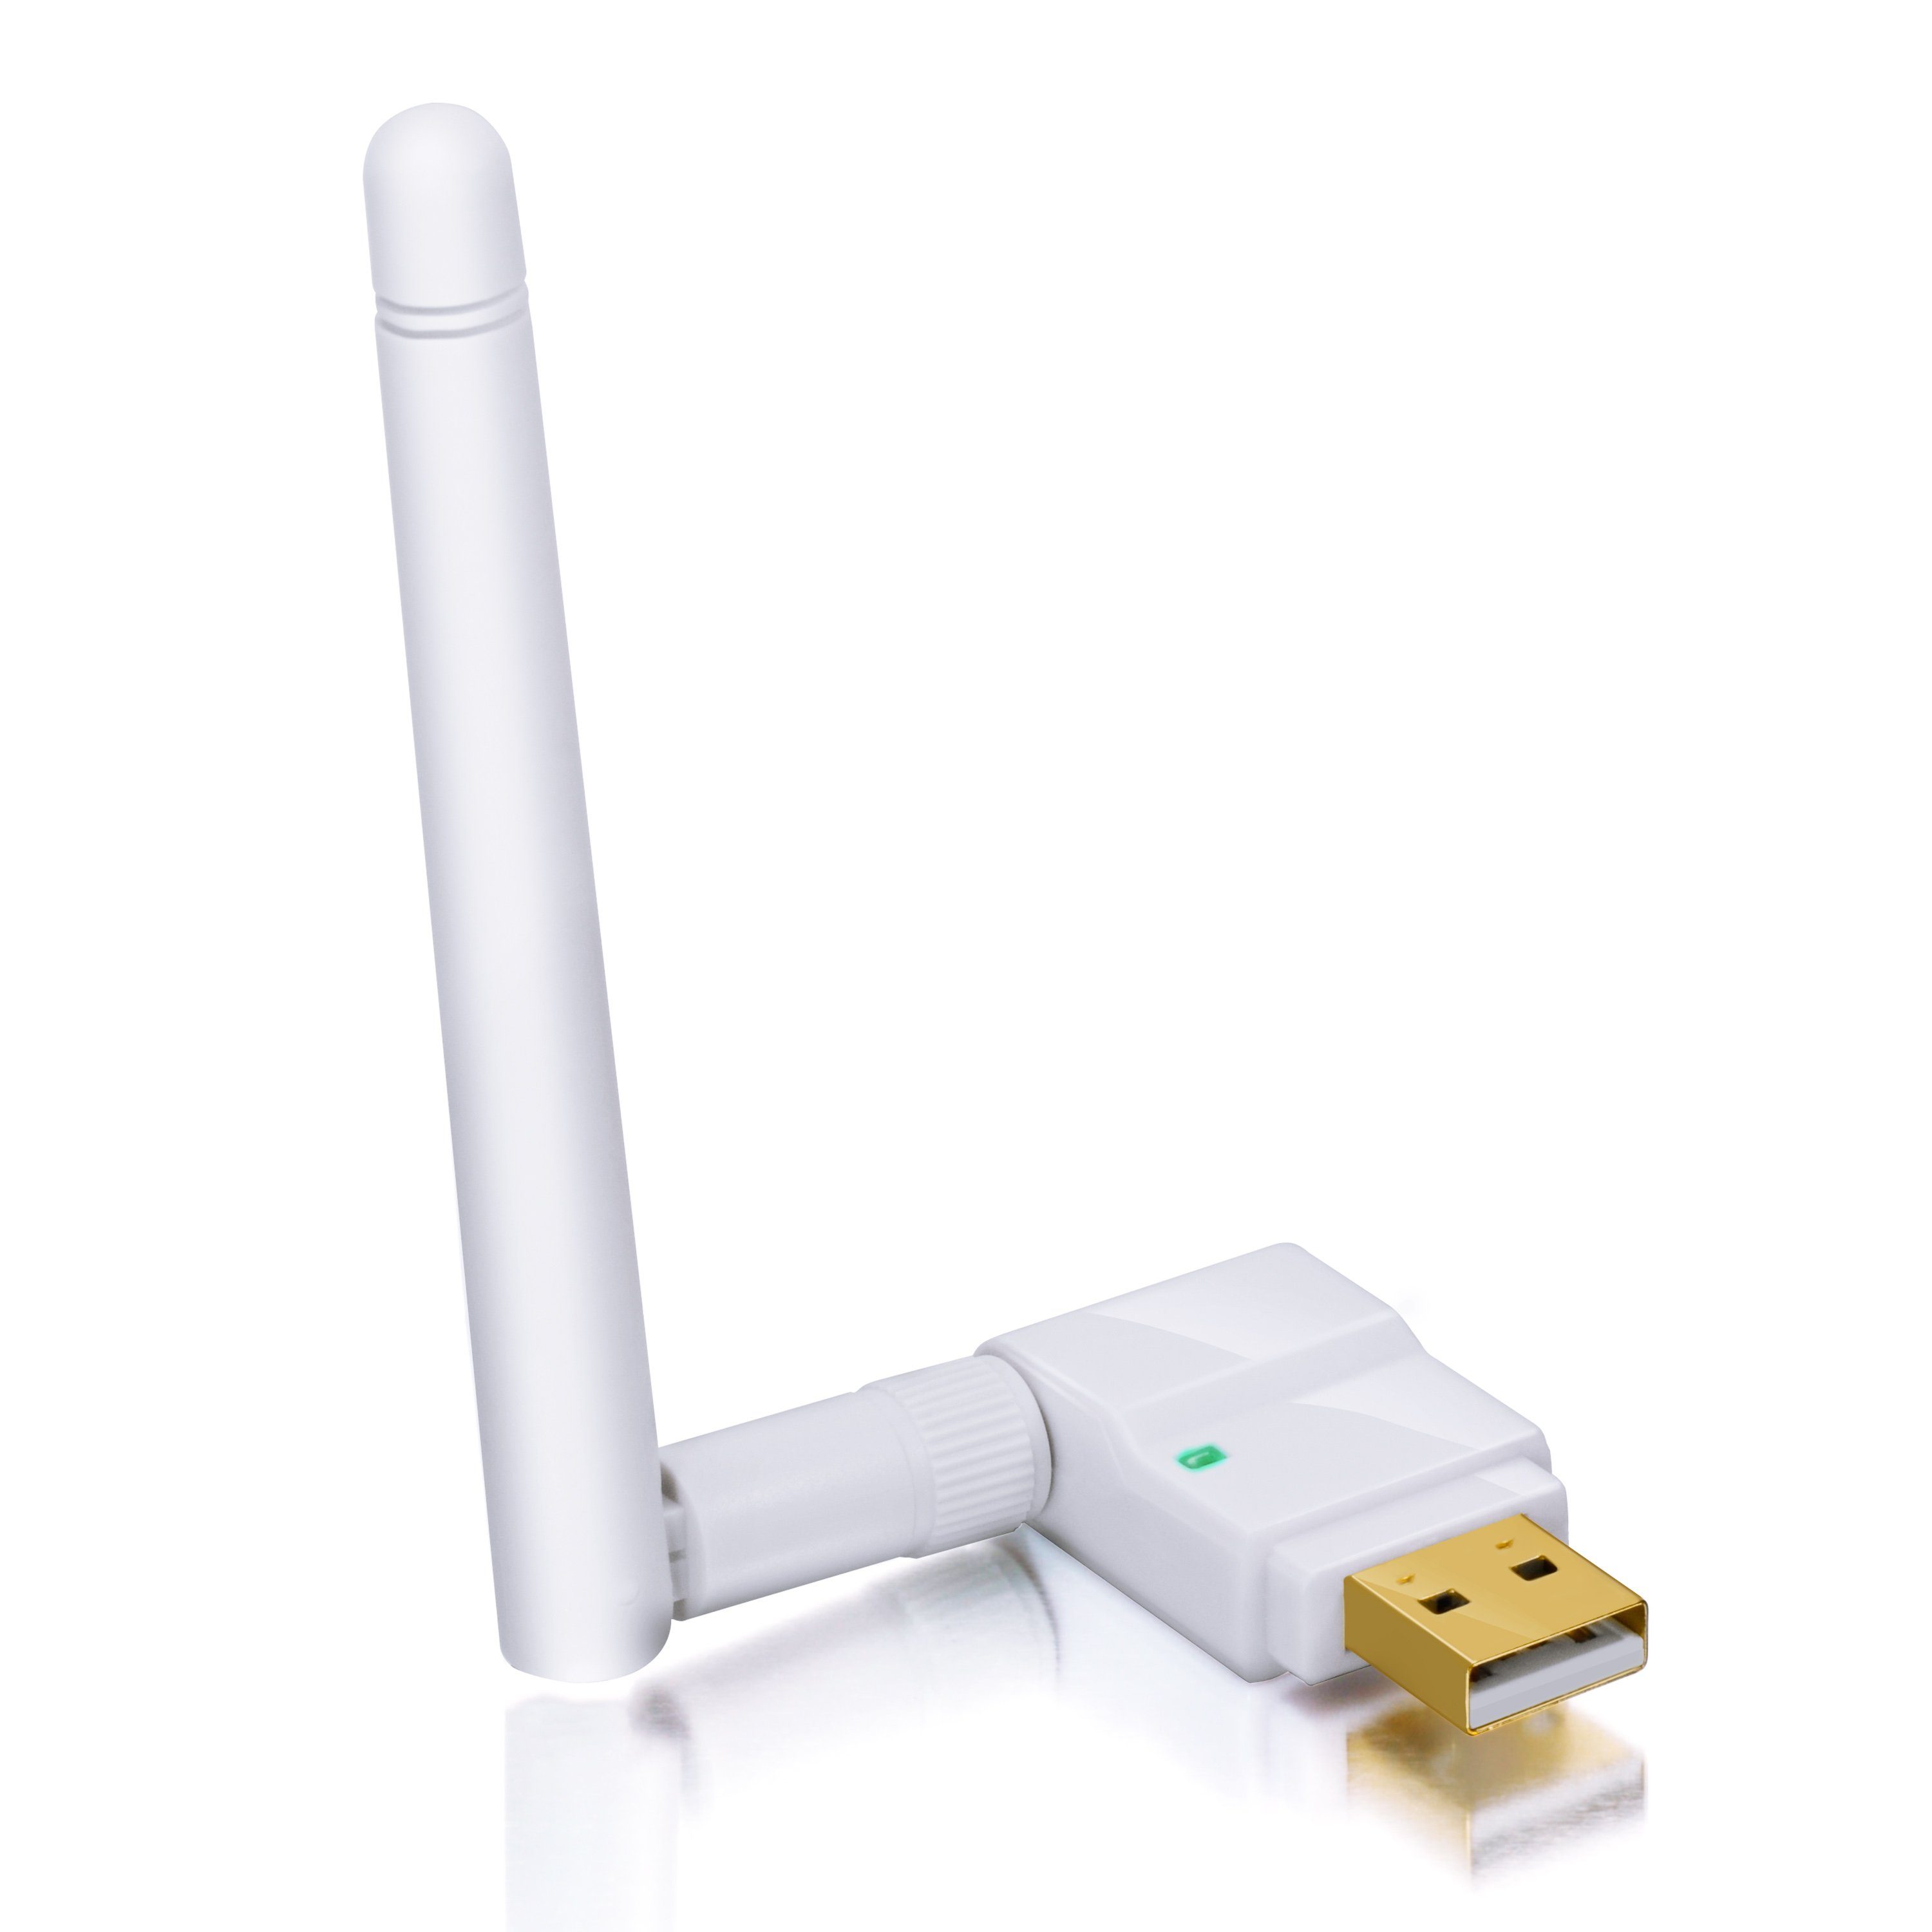 WLAN-Dongle, WLAN CSL Stick, 2.0 Antenne, USB abnehmbarer Mbit/s, Stick mit 300